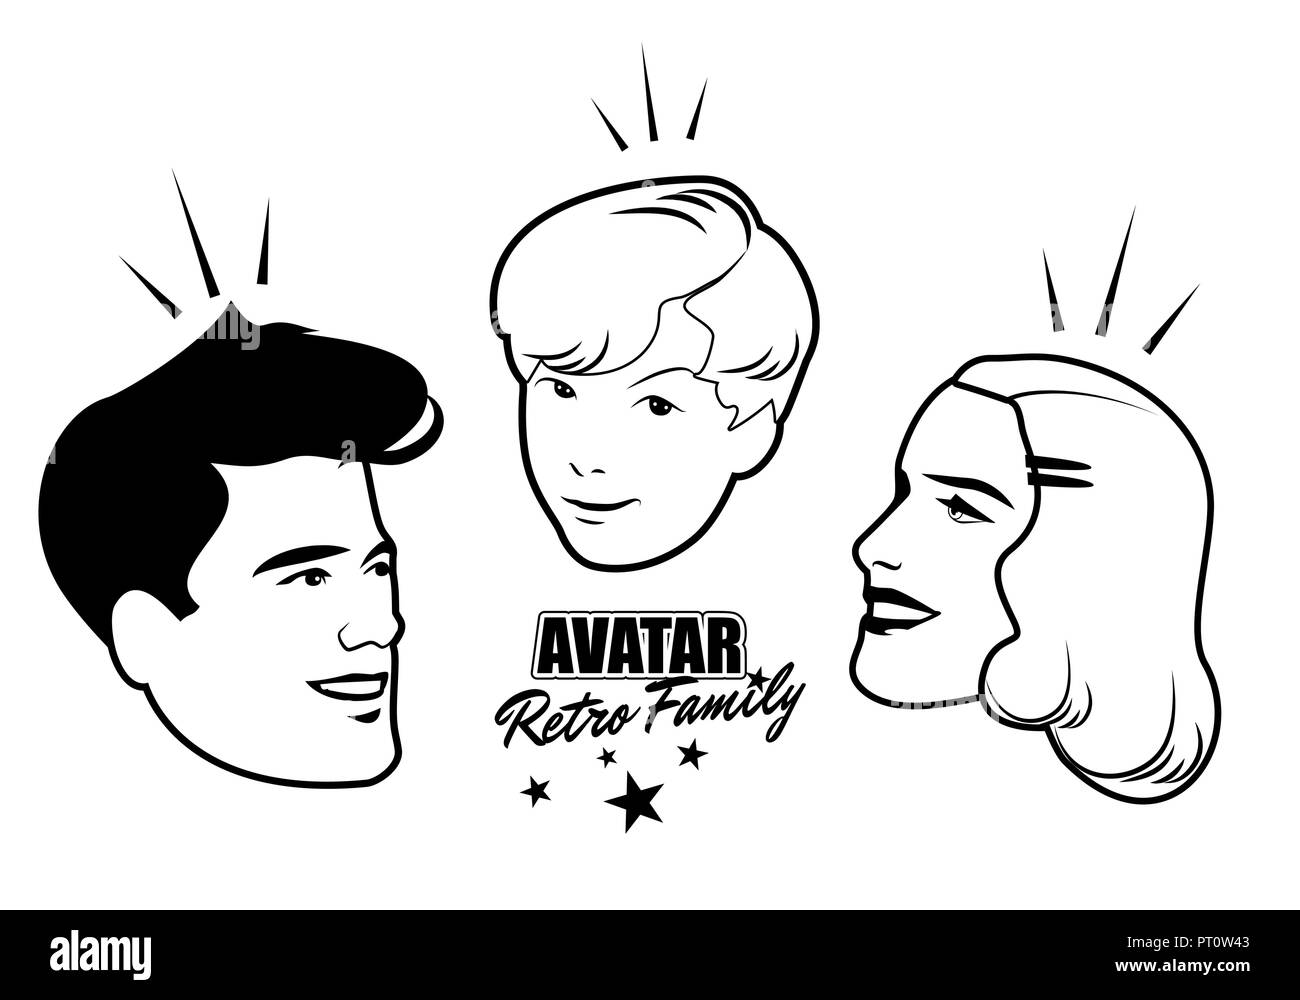 Avatar Retro Family. Cartoon faces retro style. Vector illustration. Stock Vector